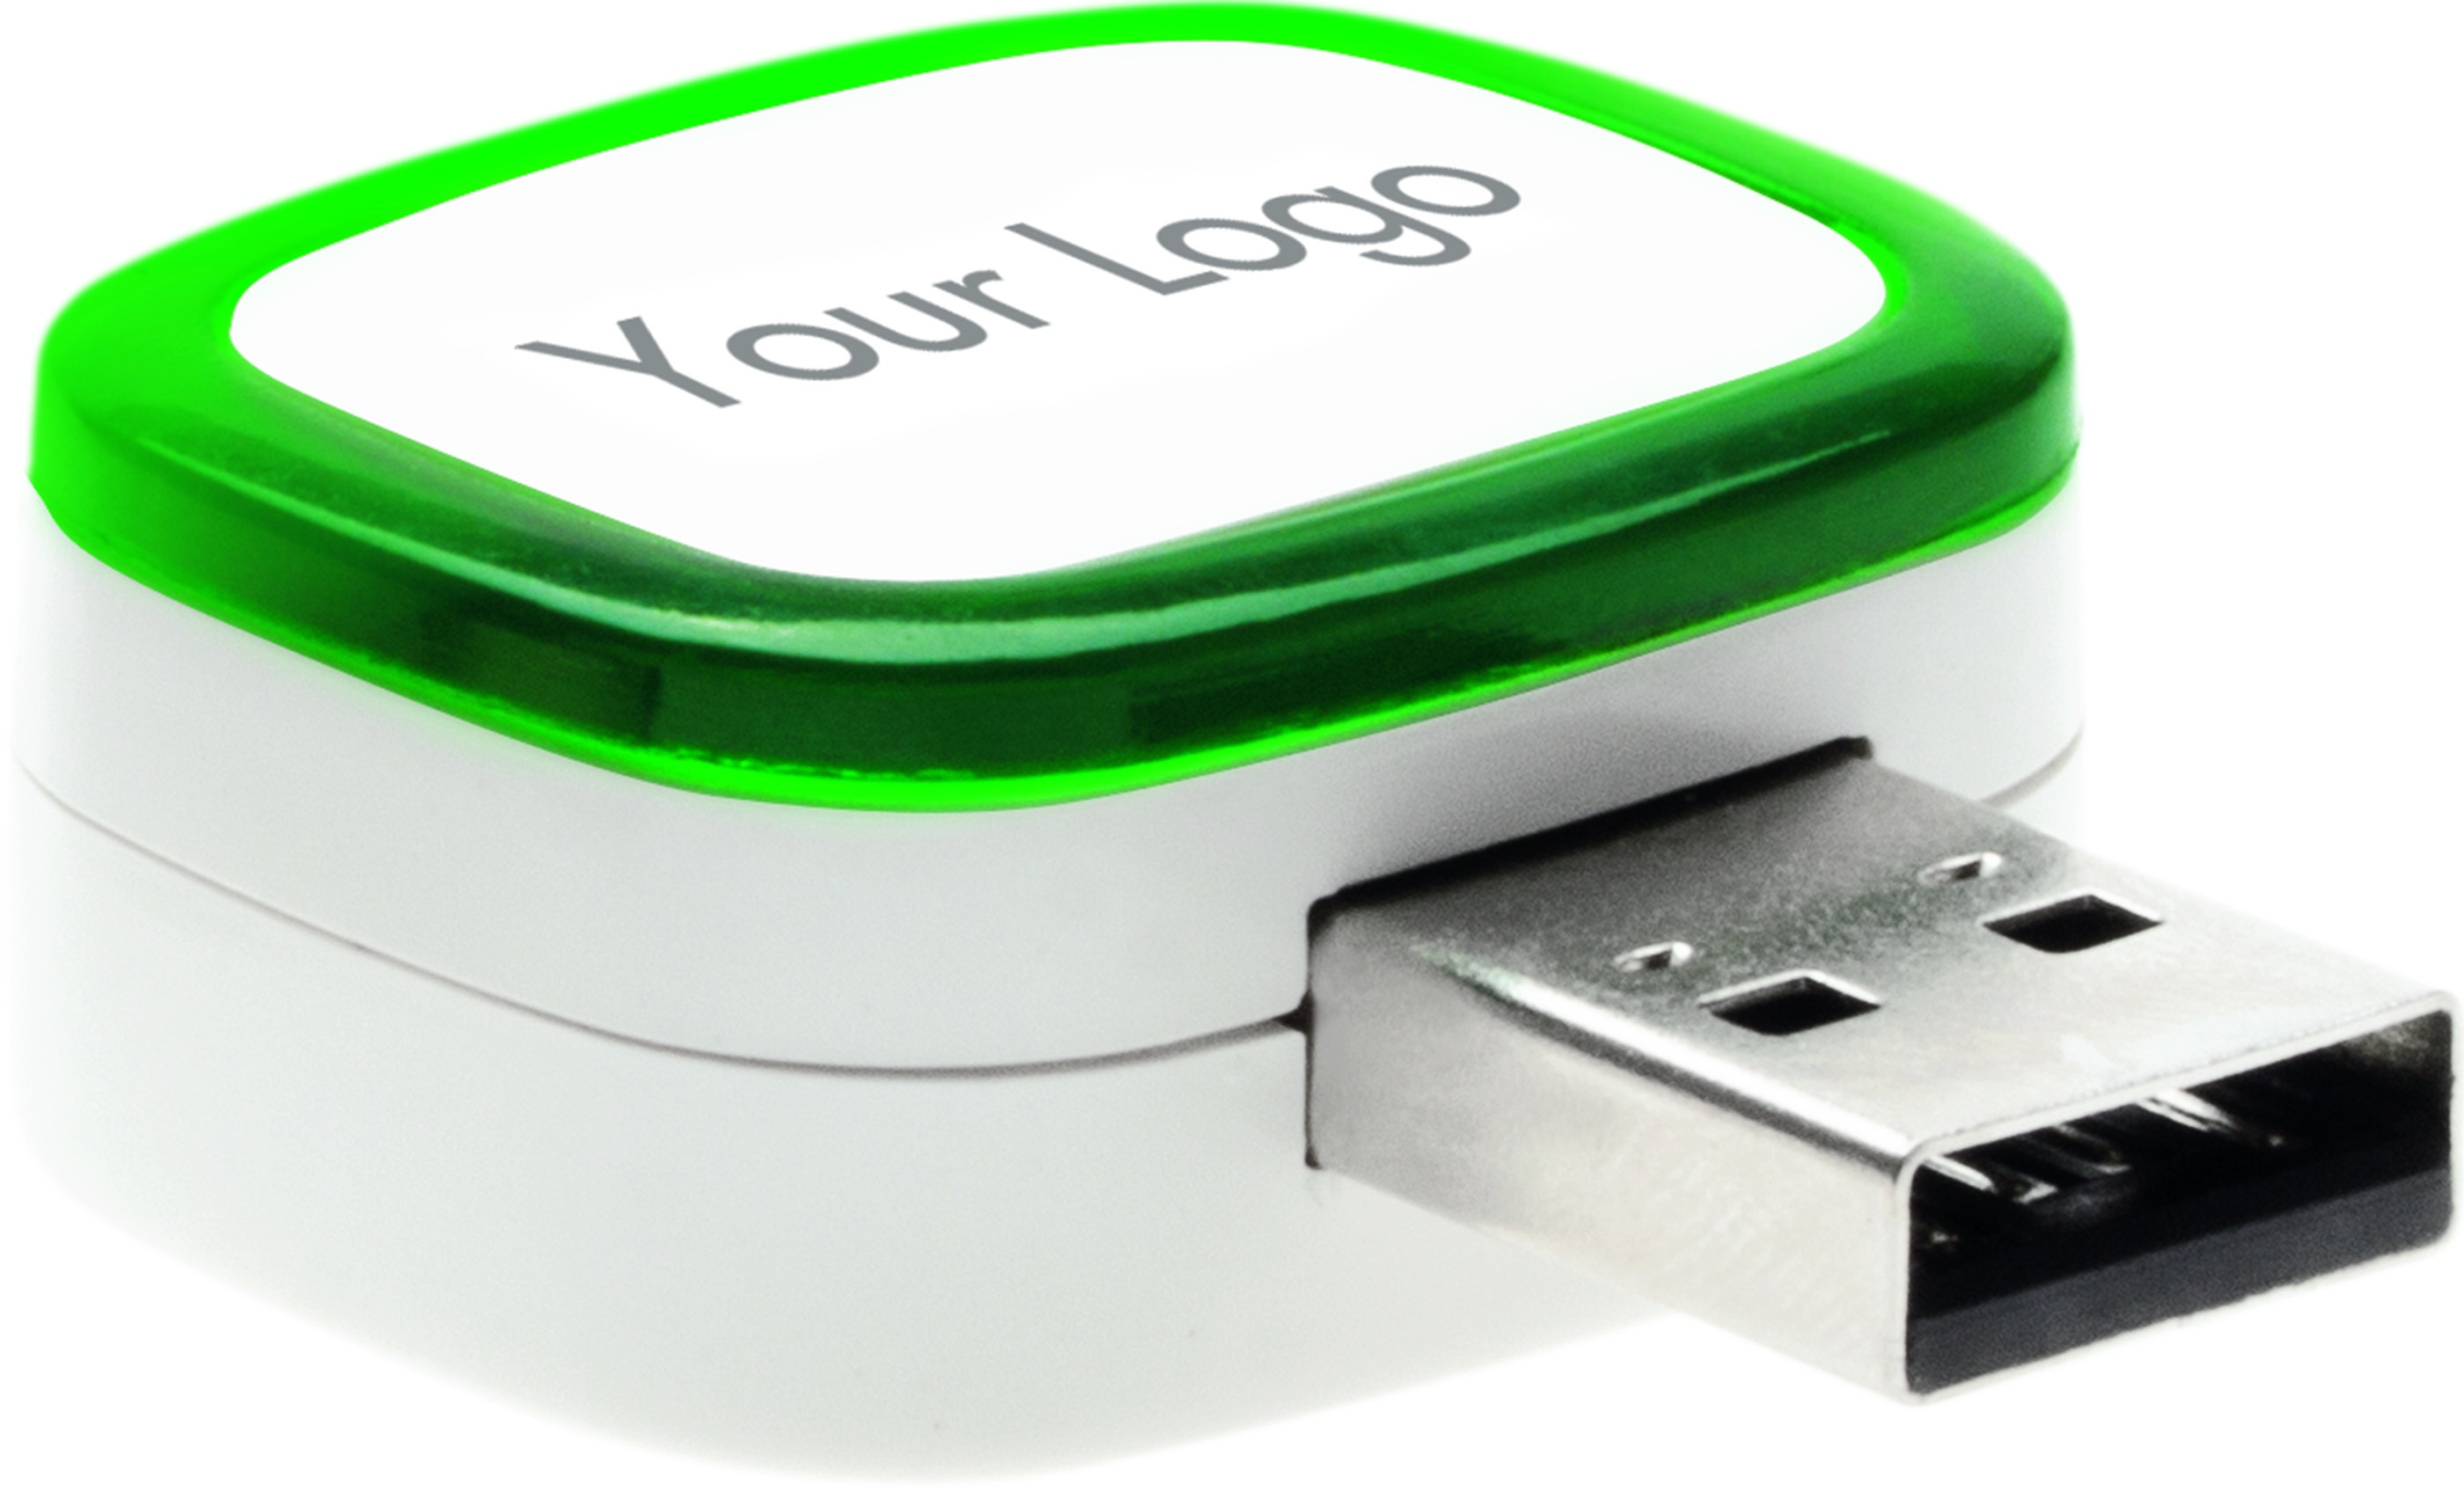 USB LED light green